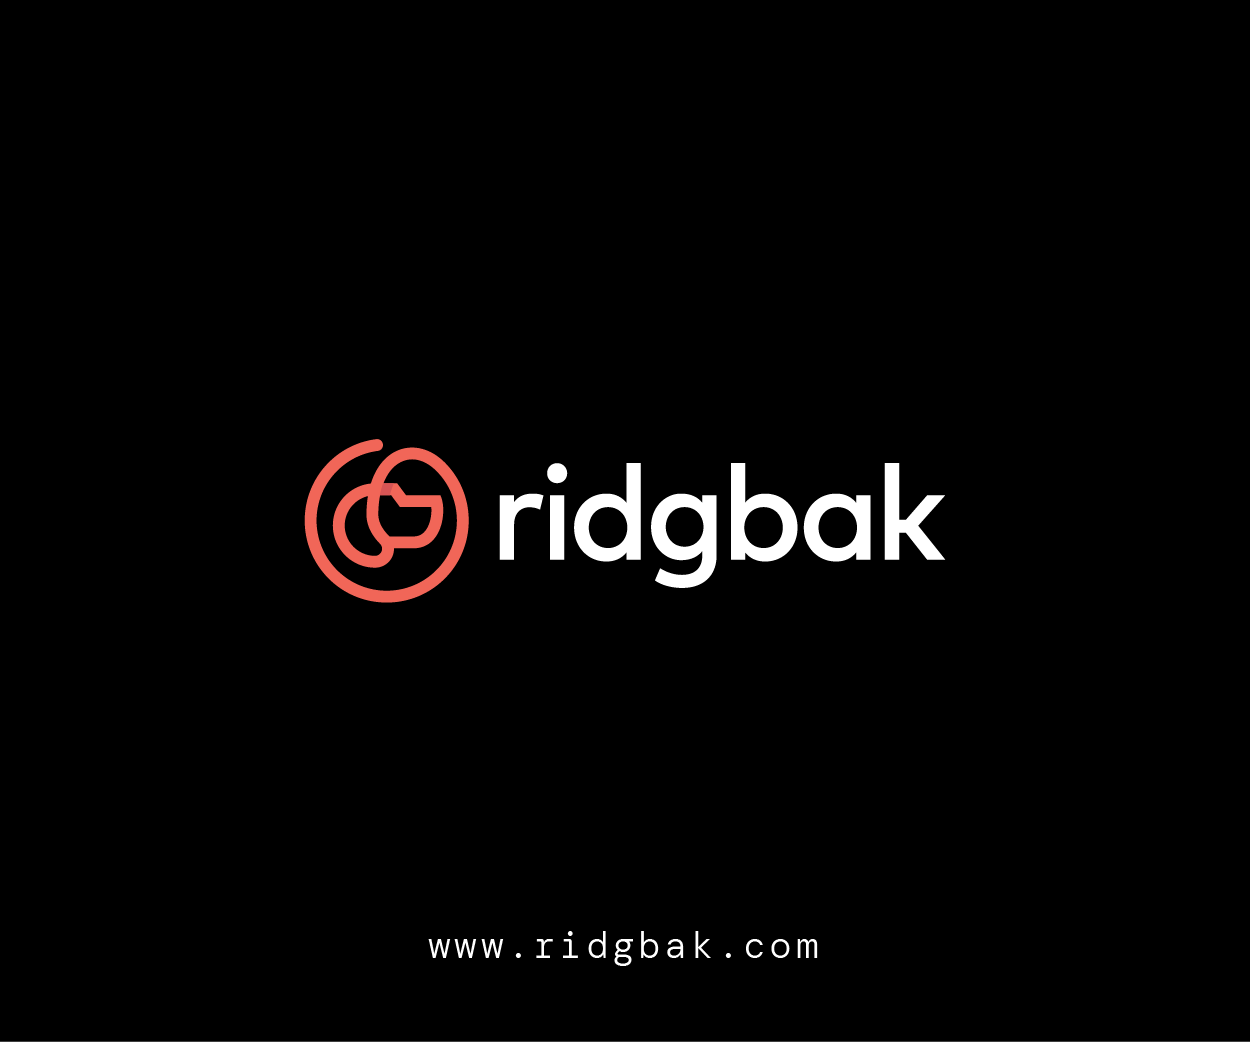 Ridgbak - enterprise risk management company Logo Design Image